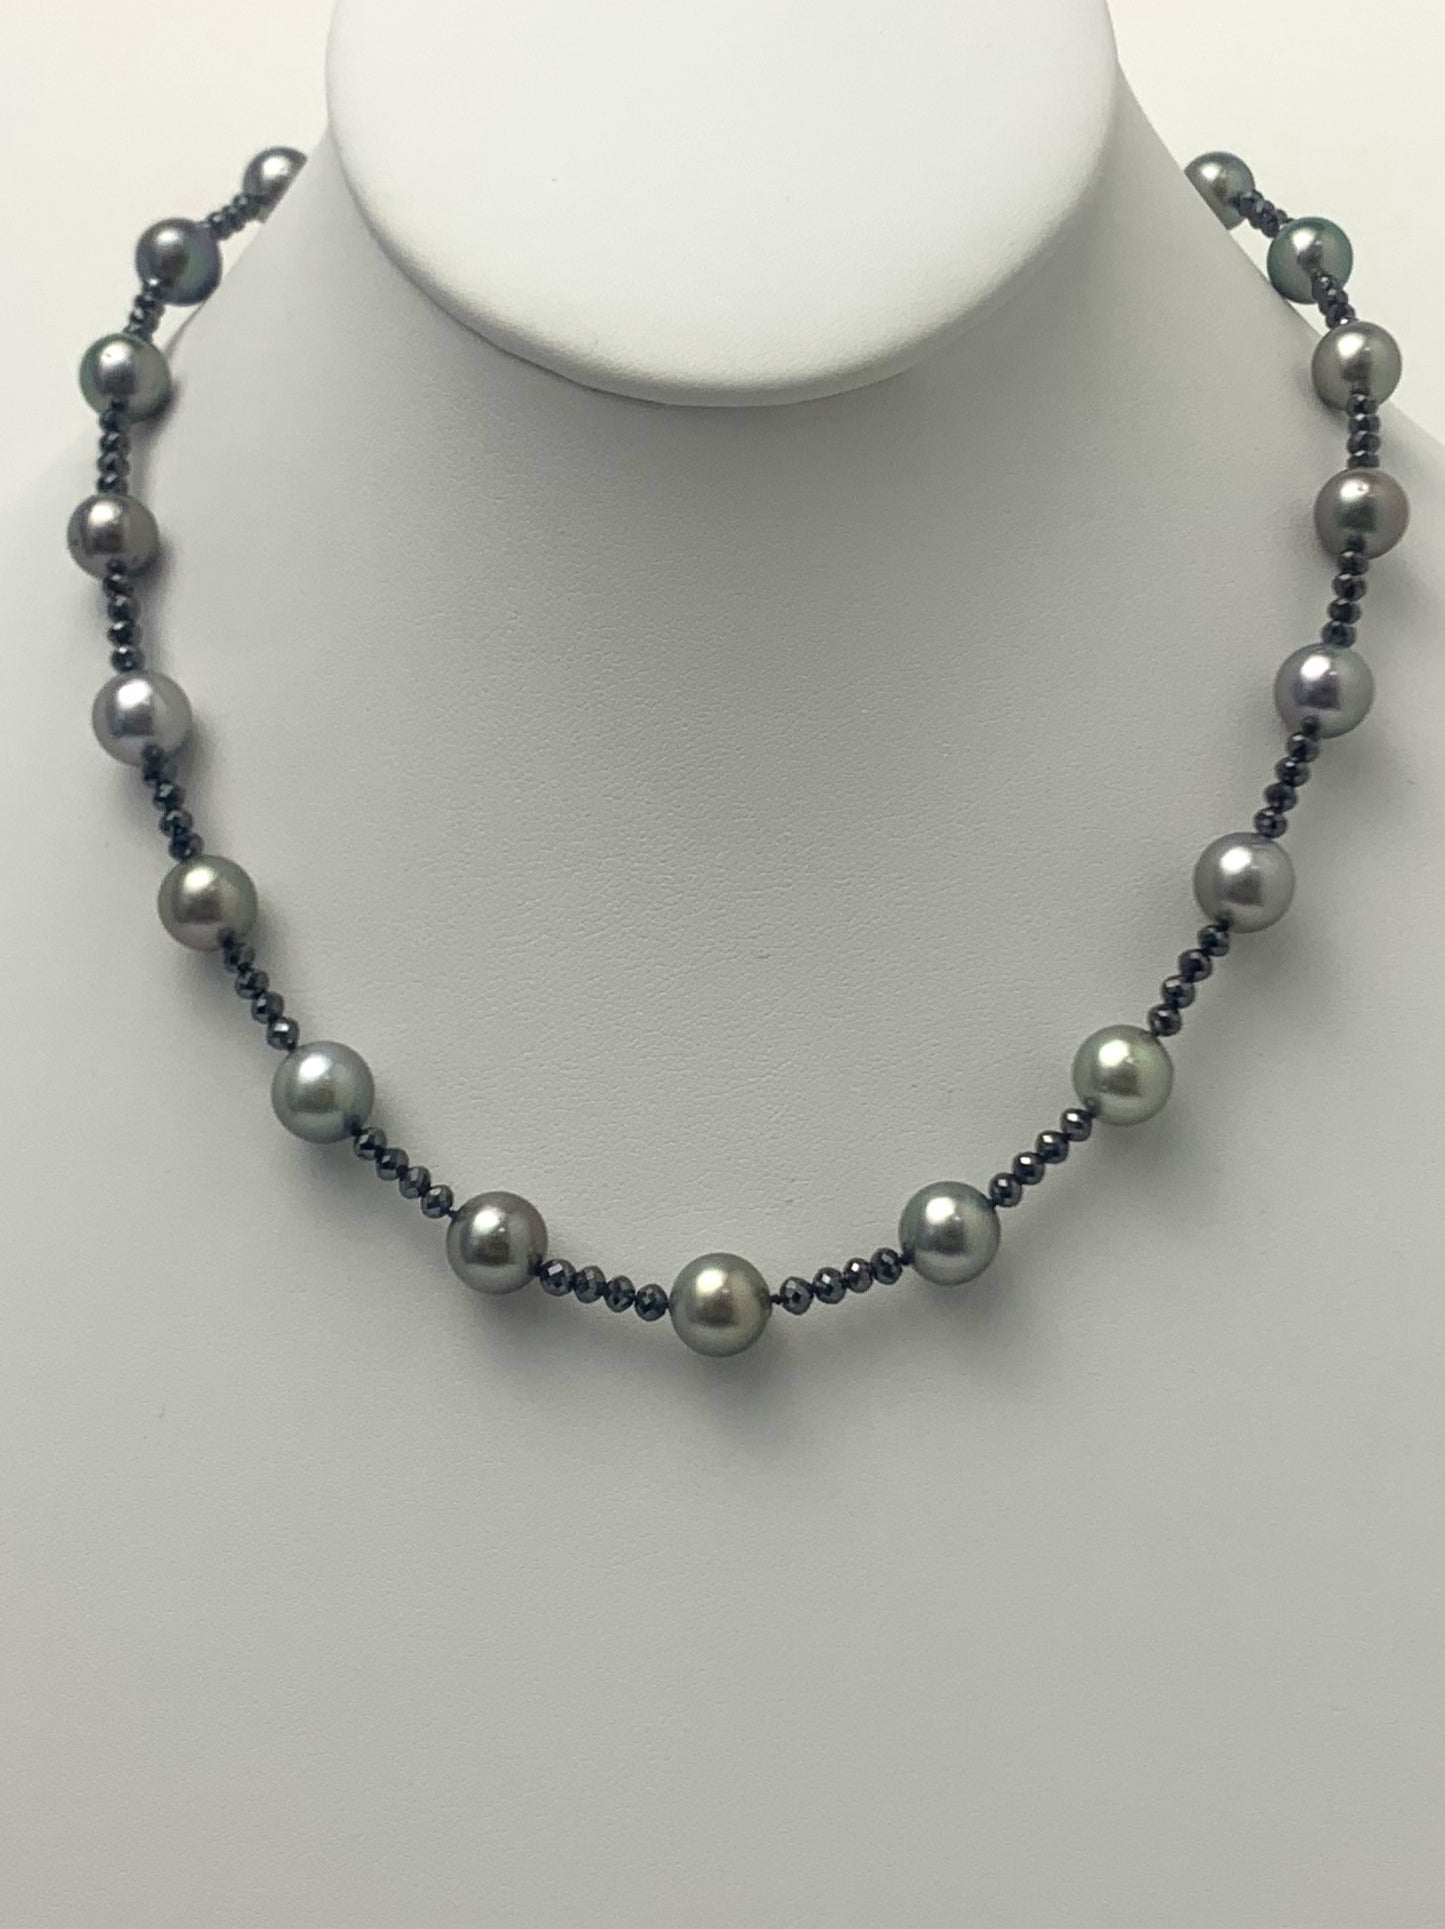 17" Black Diamond Grey South Sea Pearl Necklace in 14KW - NCK-047-DIAPRL14W-17-BLKGRY-17-07351 19.6ctw